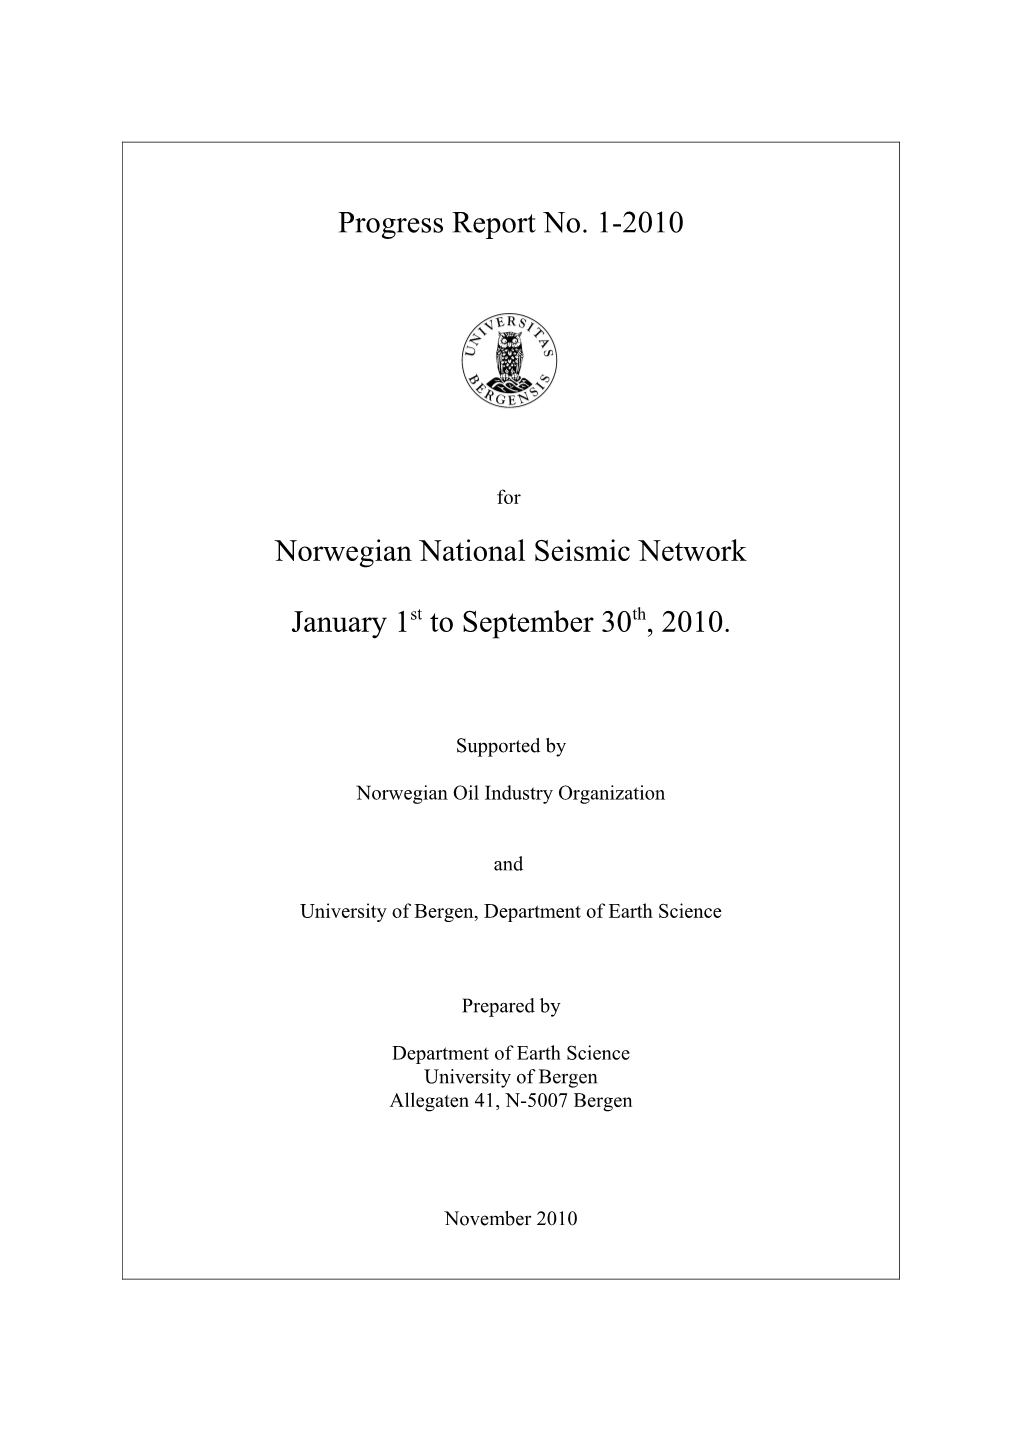 Norwegian National Seismic Network Progress Report 2010